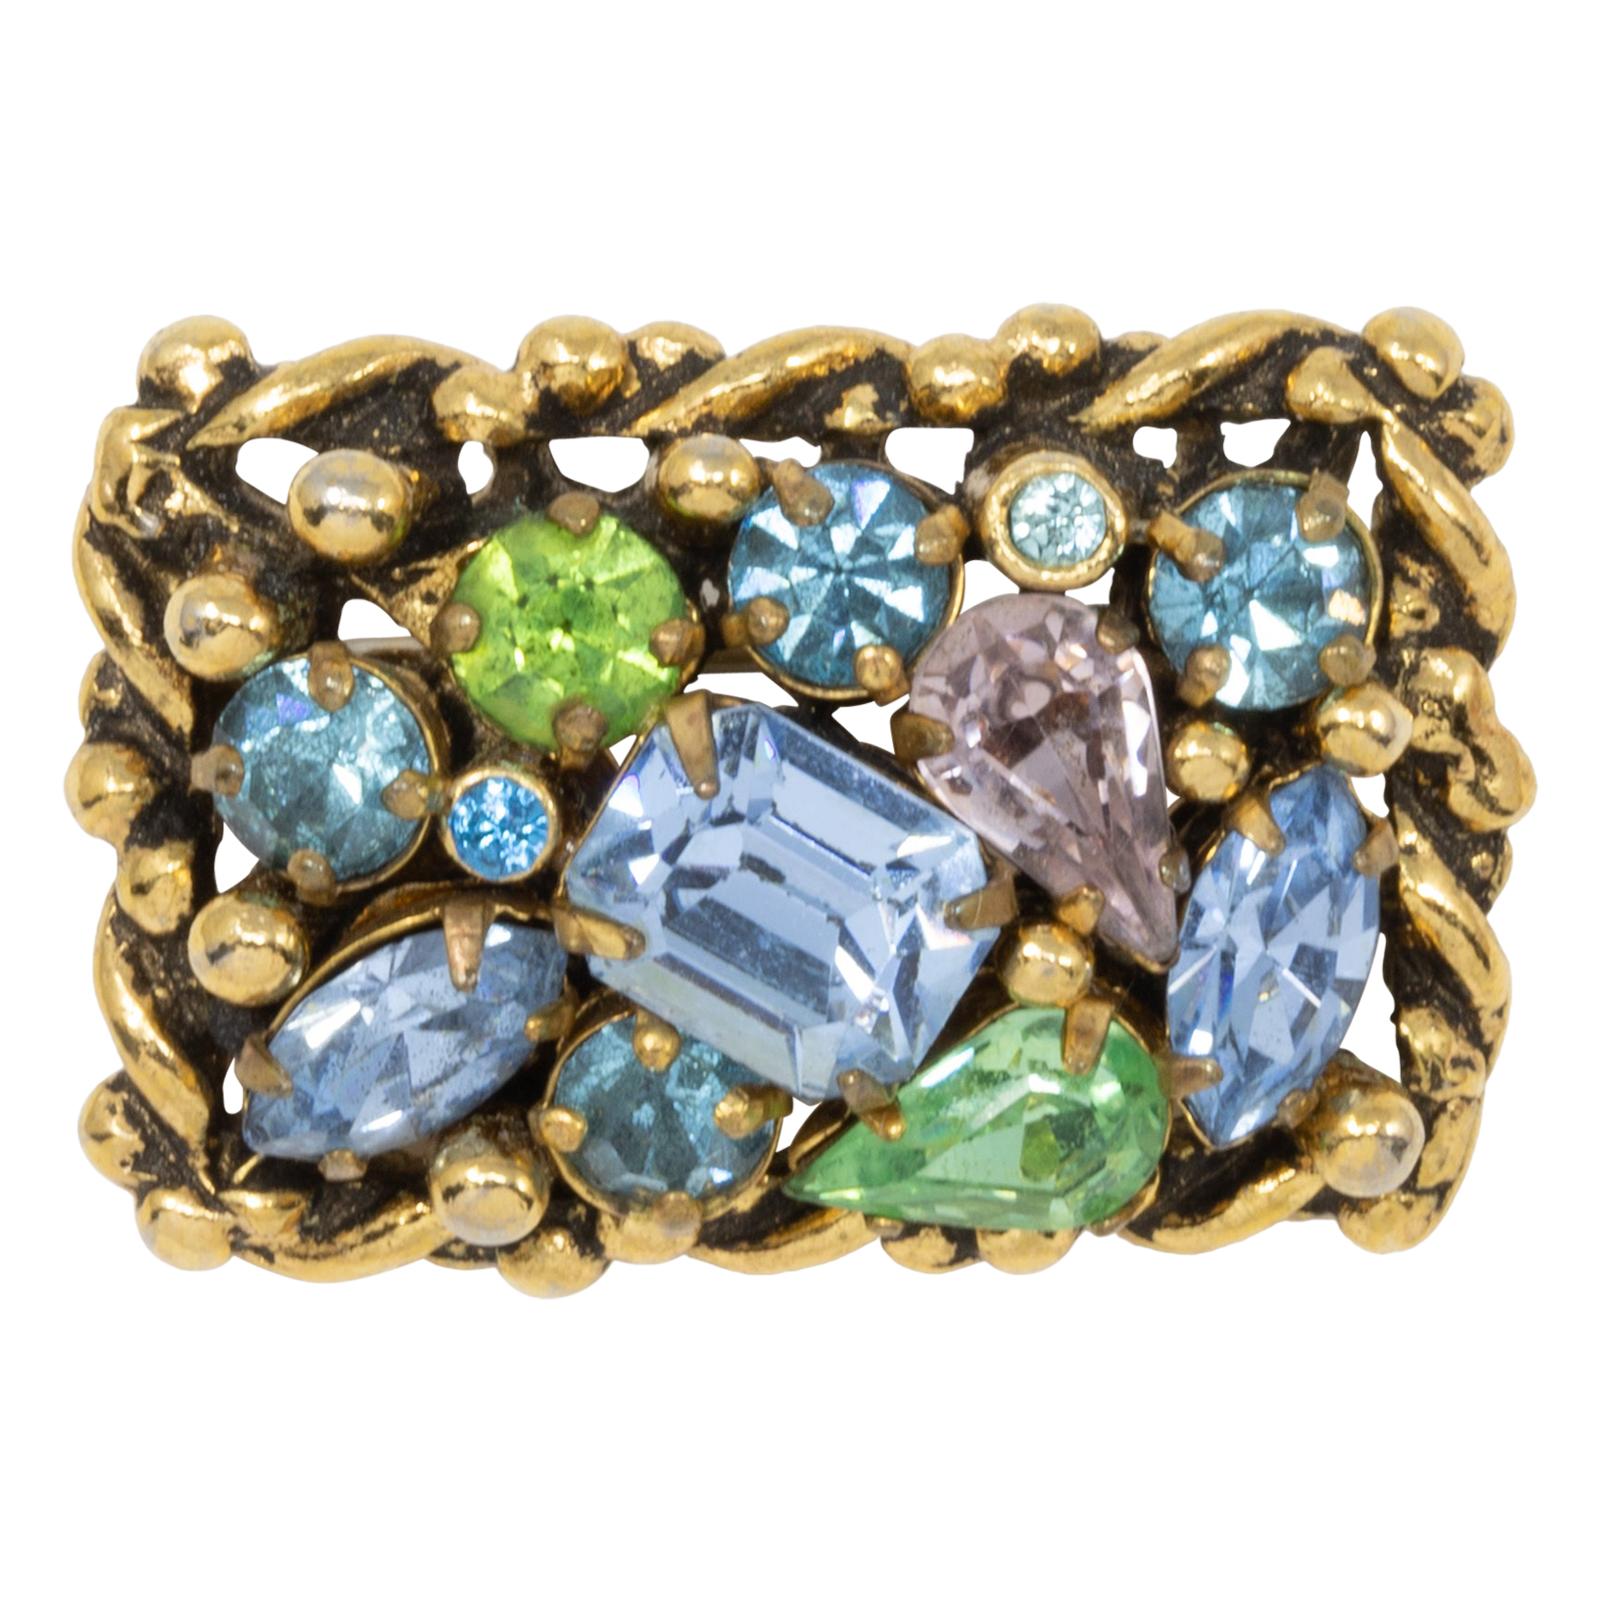 Barclay Gold Jewels of India Collection Pin Brooch, Aquamarine, Peridot Crystal 